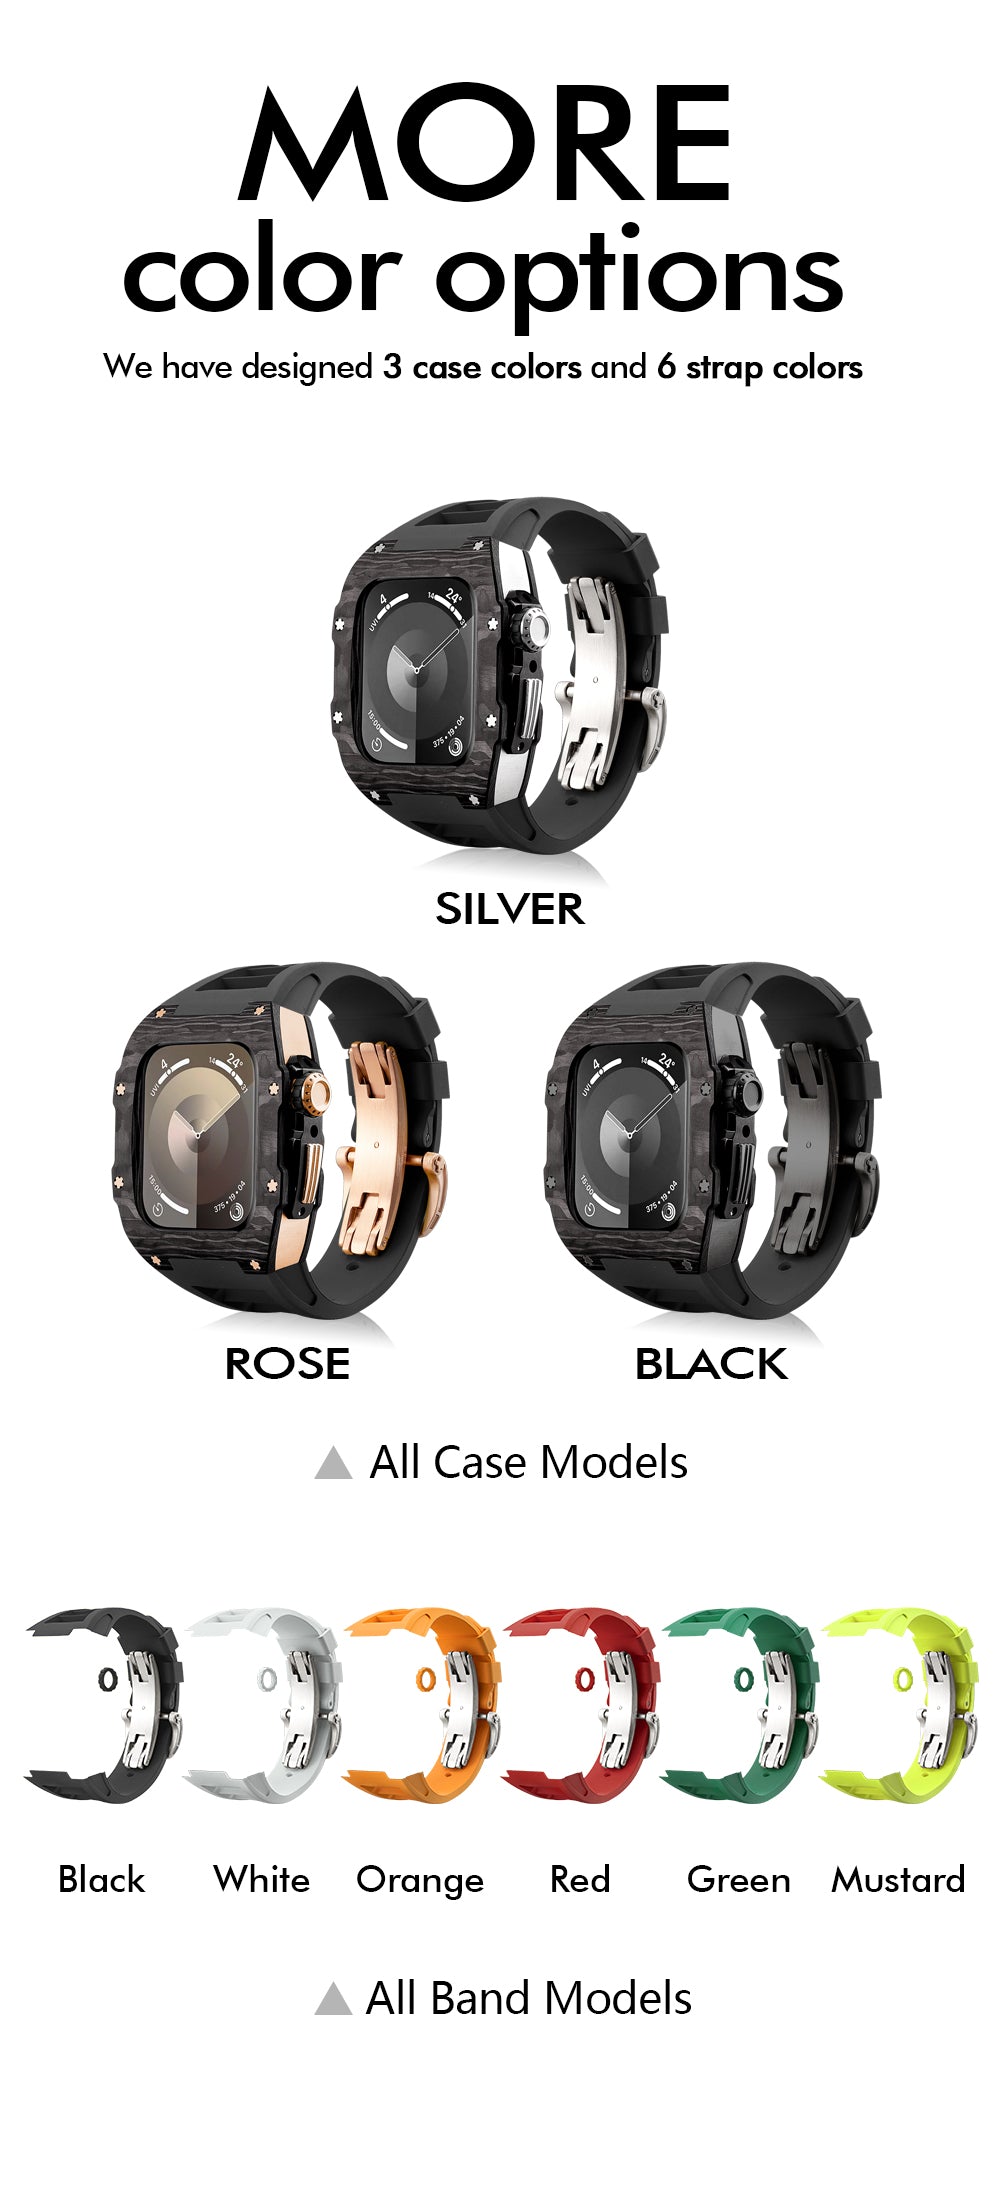 Apple Watch Case for Series 4/5/6/7/8/SE - Carbon Fiber Ti Black Case + Yellow Fluoro Strap